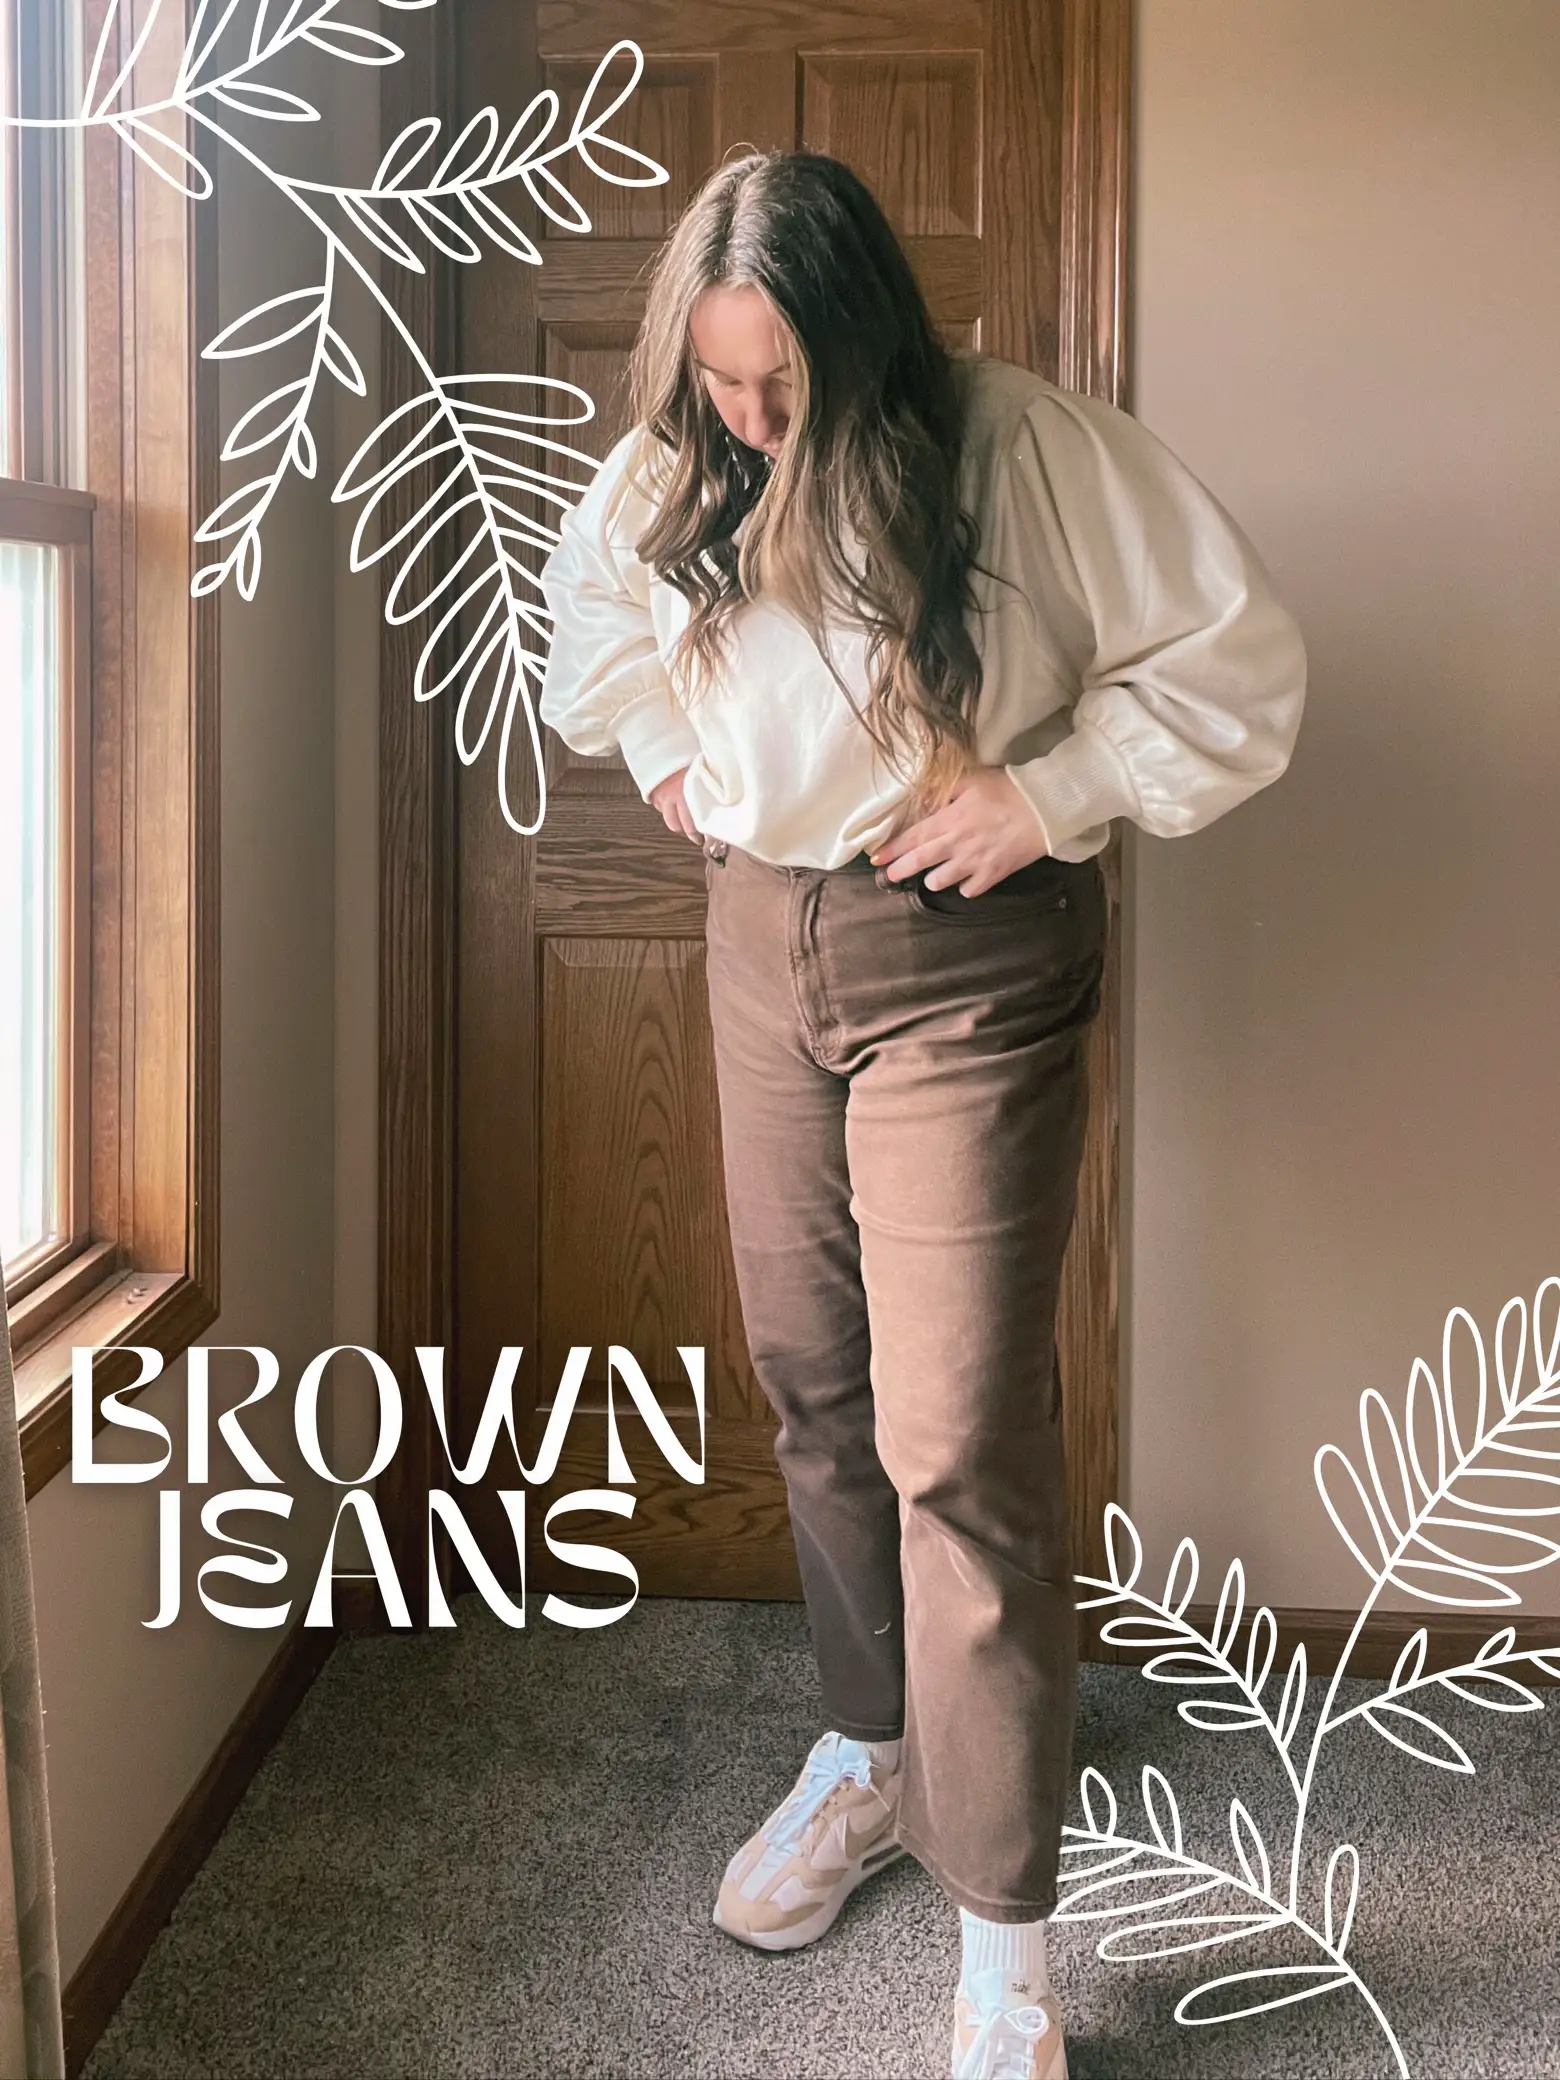 BROWN JEANS 🤎, Gallery posted by Sierra Kile